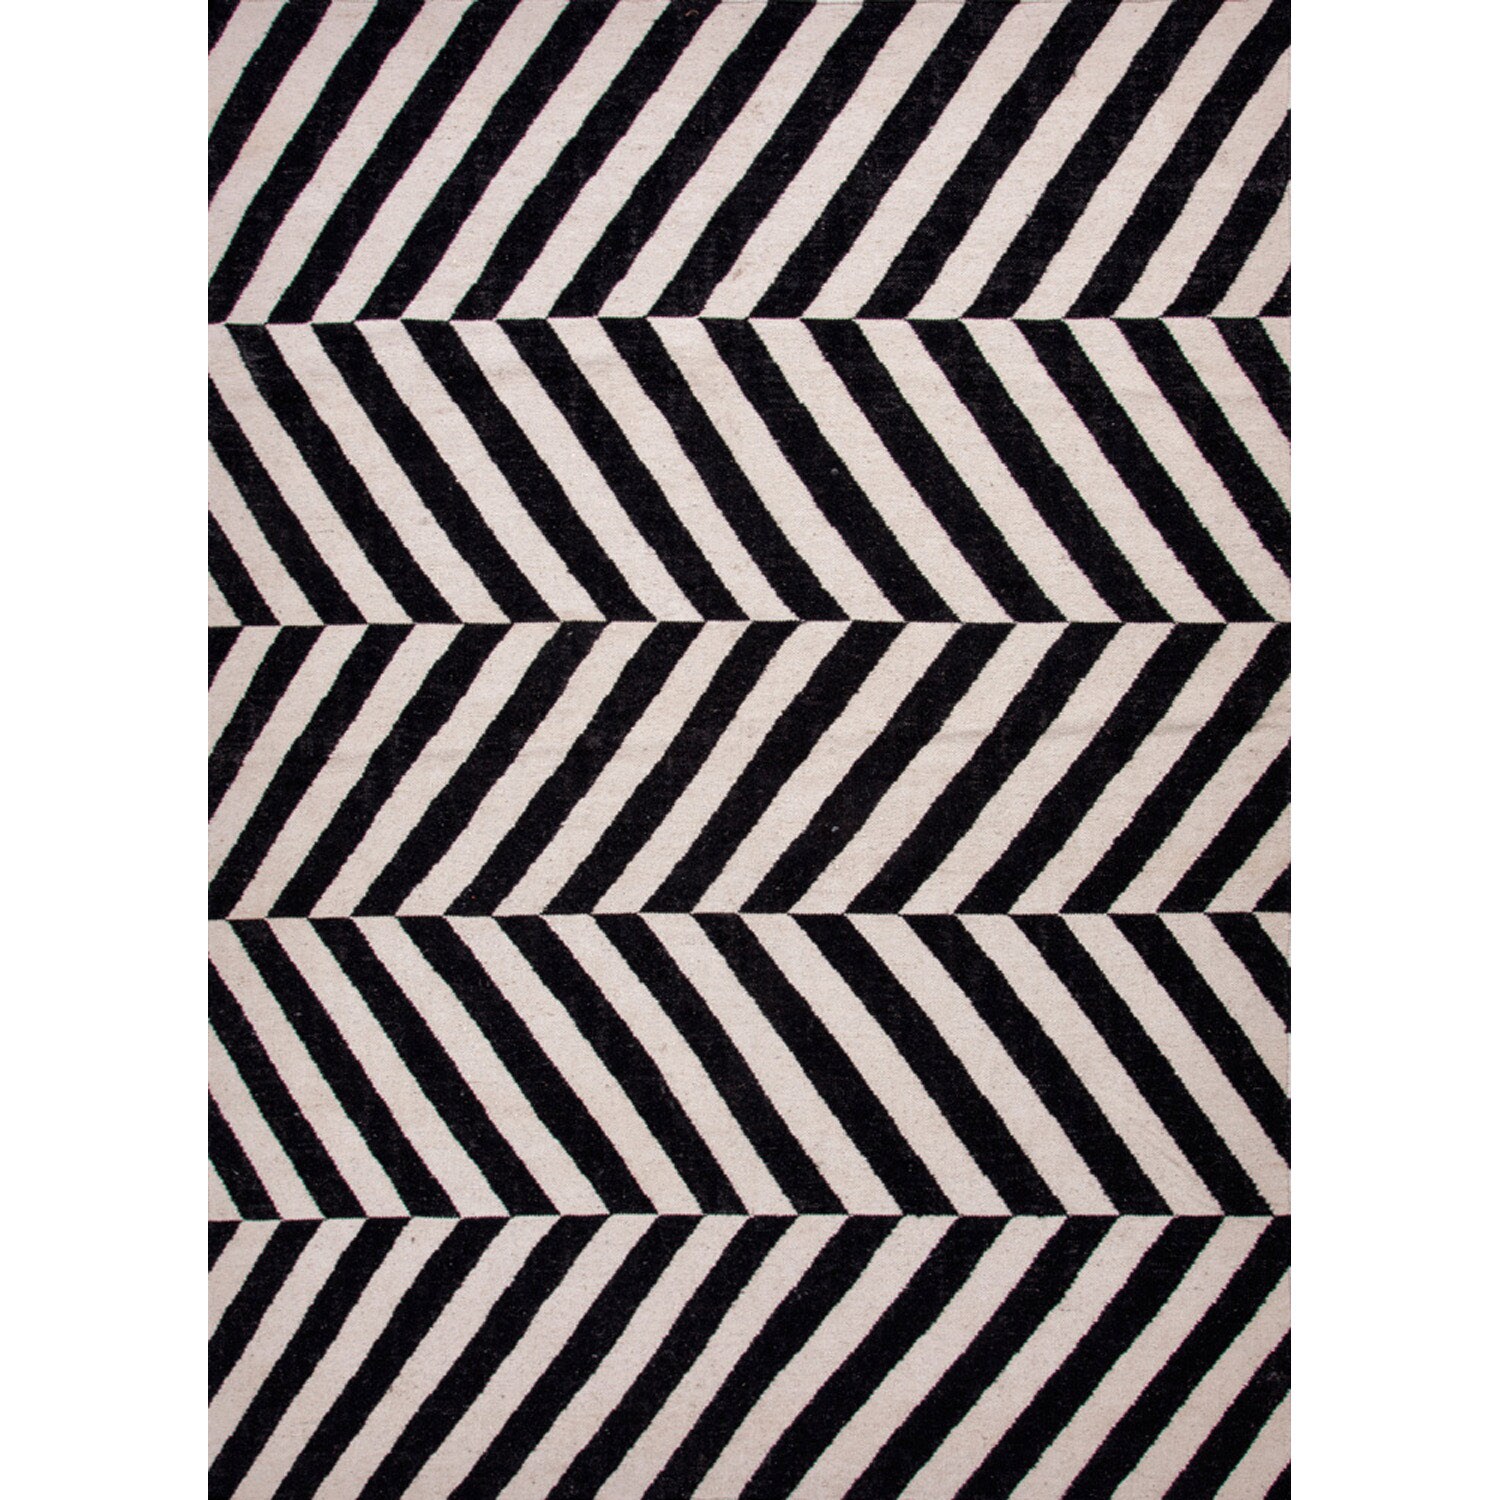 Handmade Flat Weave Stripe Pattern Gray/ Black Rug (8 X 10)